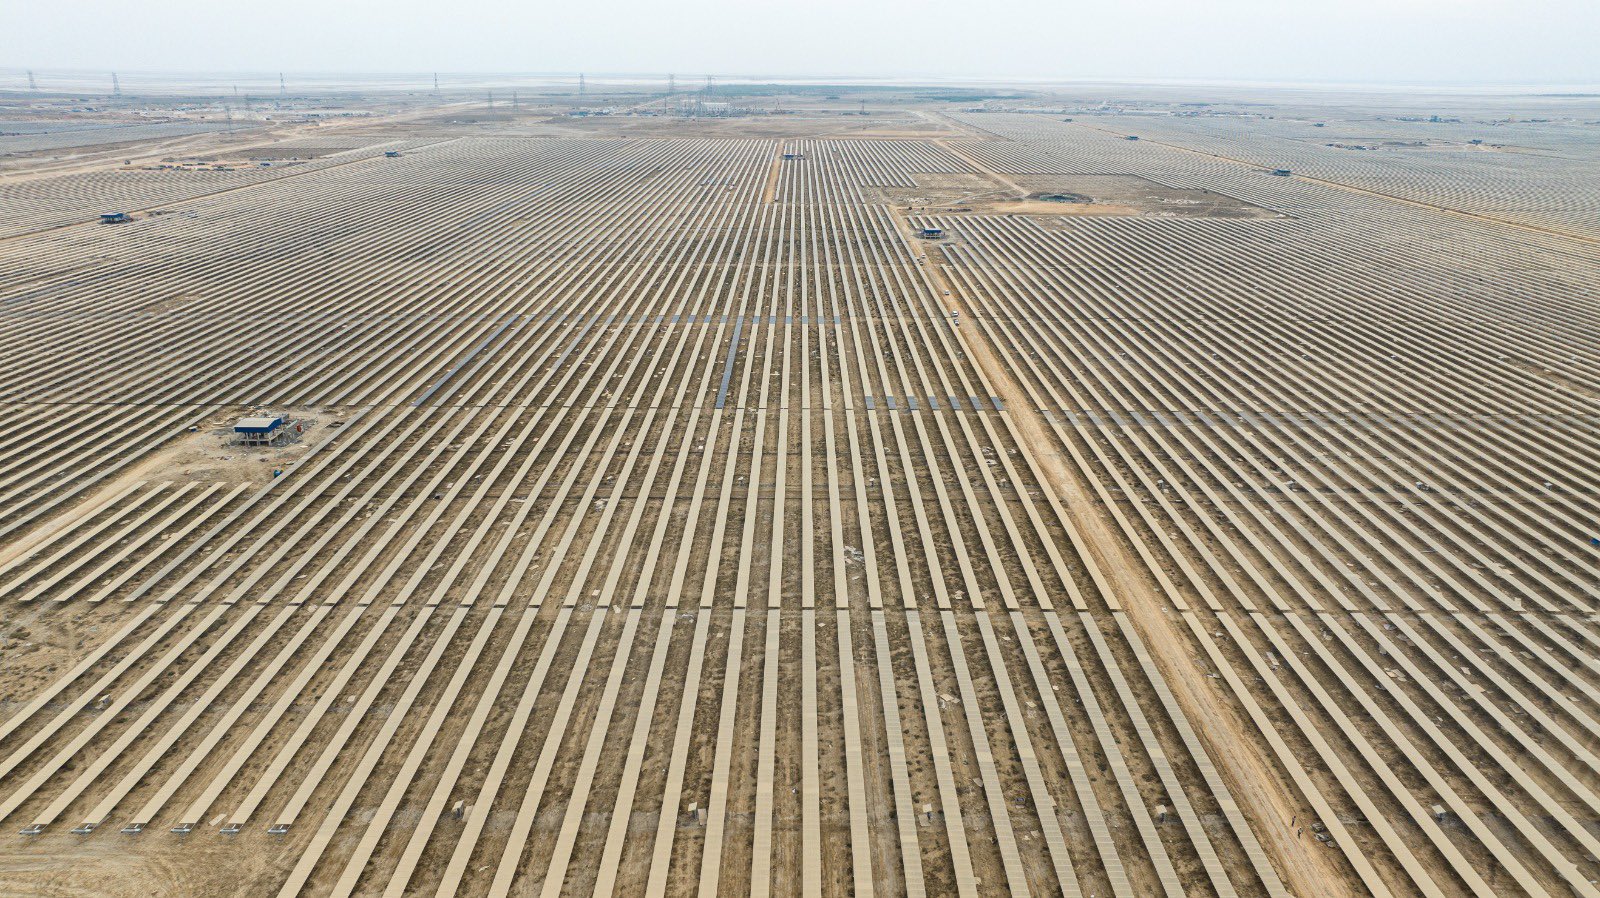 Adani Group unveils plan for world's largest renewable energy park in Gujarat